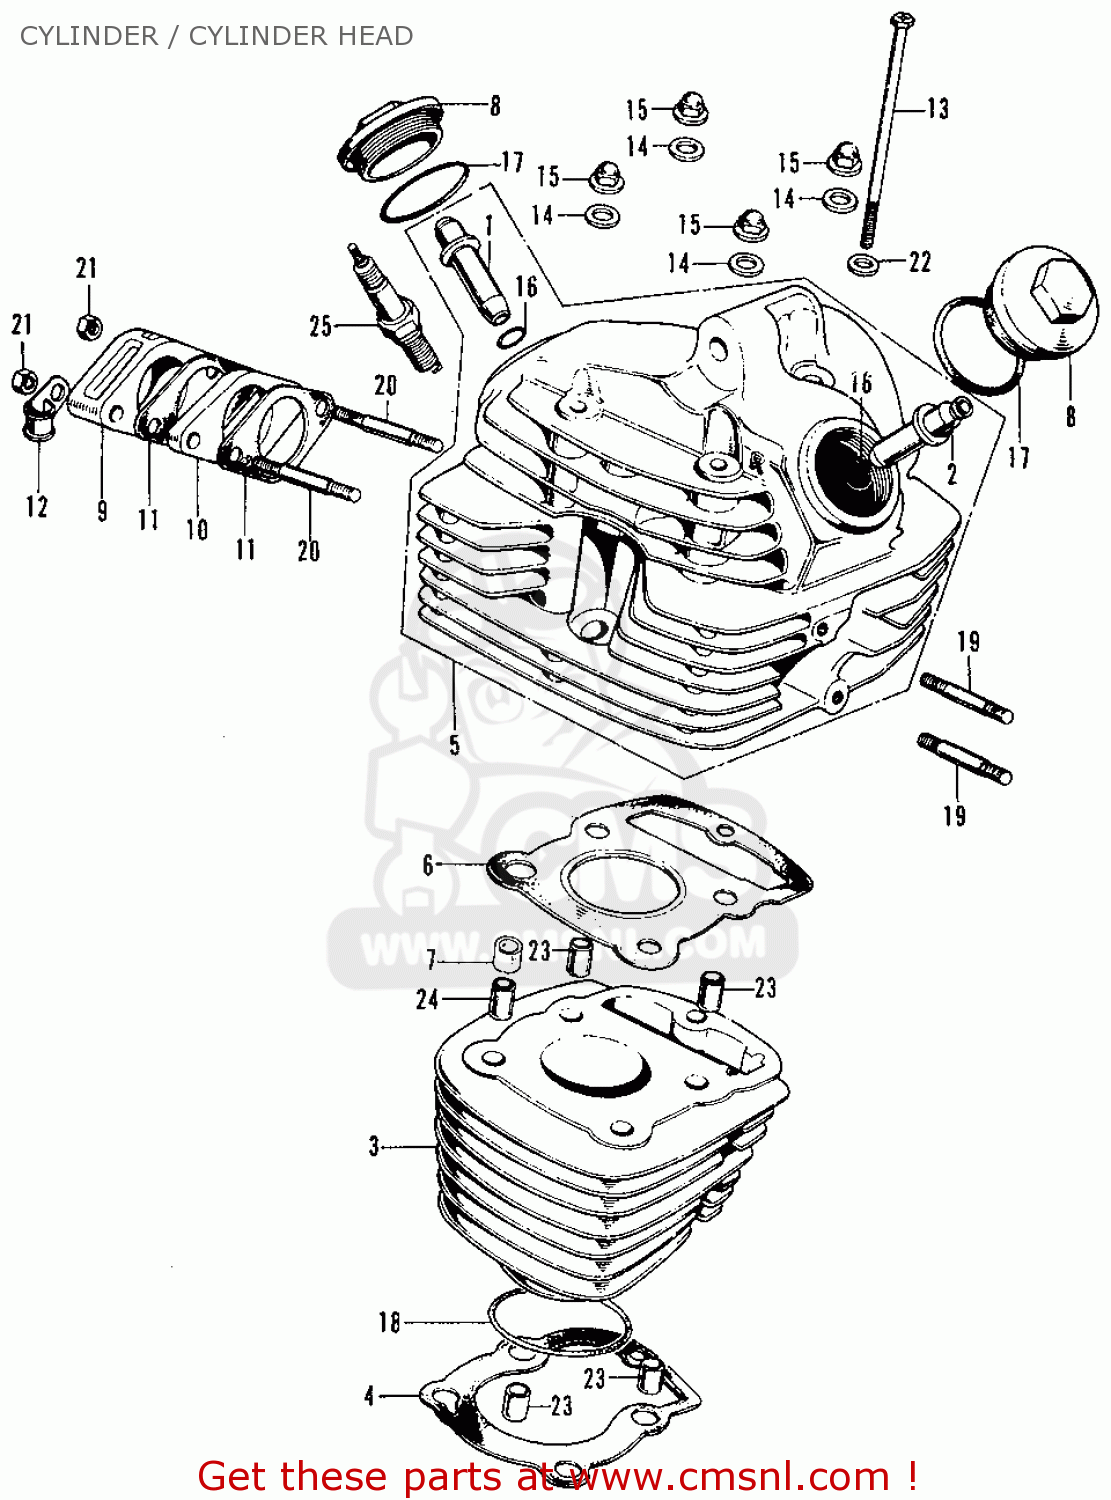 Dépoussierage d'une CBS Candy Topaz de 1975 - Page 2 Honda-cb125s-s2-1975-usa-cylindercylinder-head_bighu0213e4101_7994